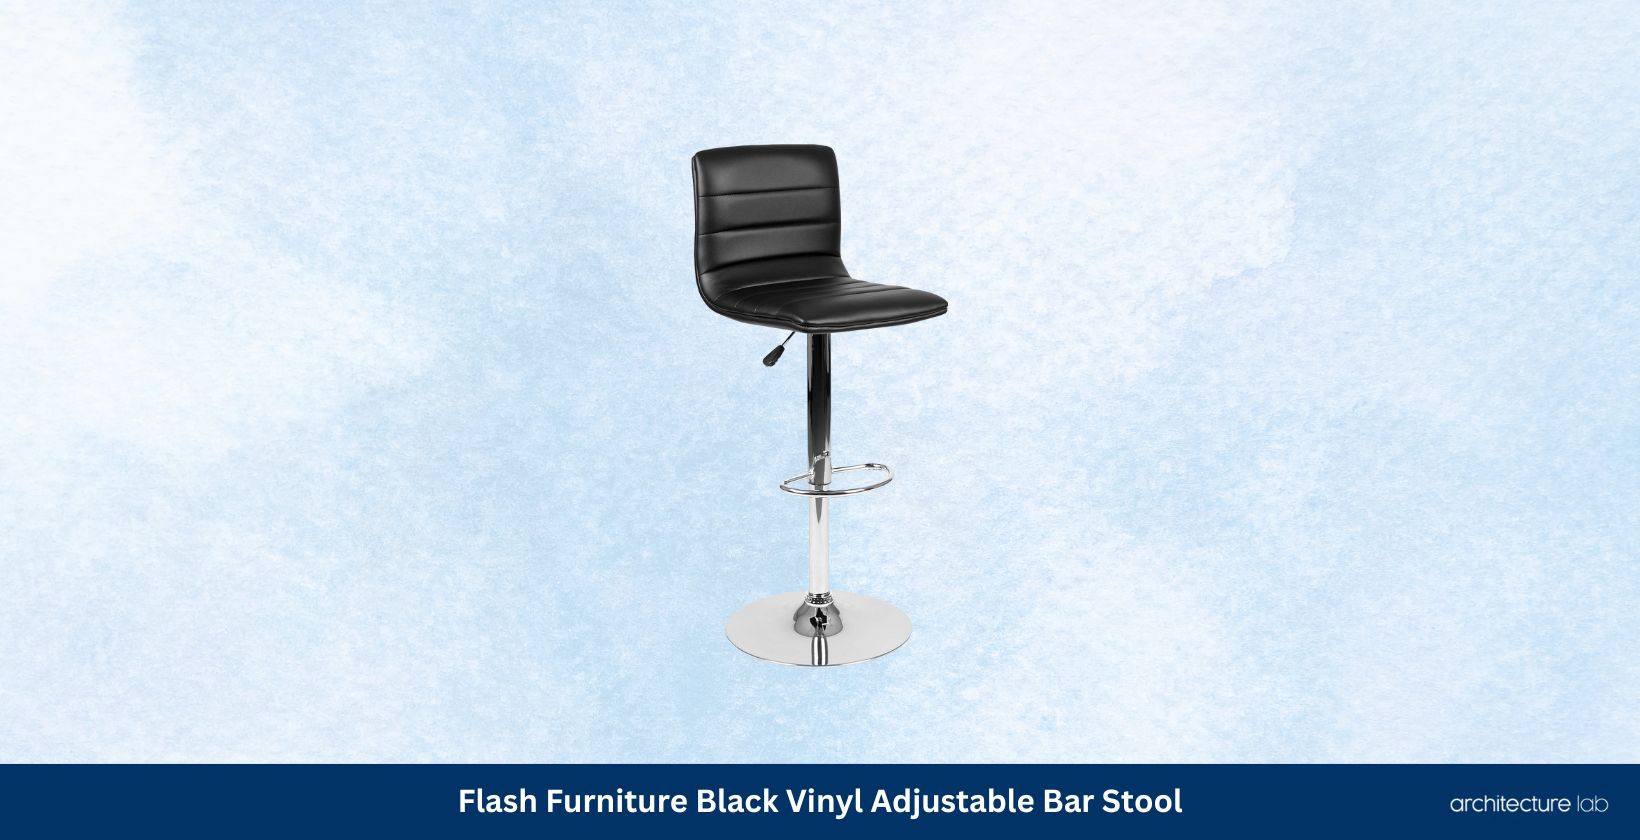 Flash furniture black vinyl adjustable bar stool